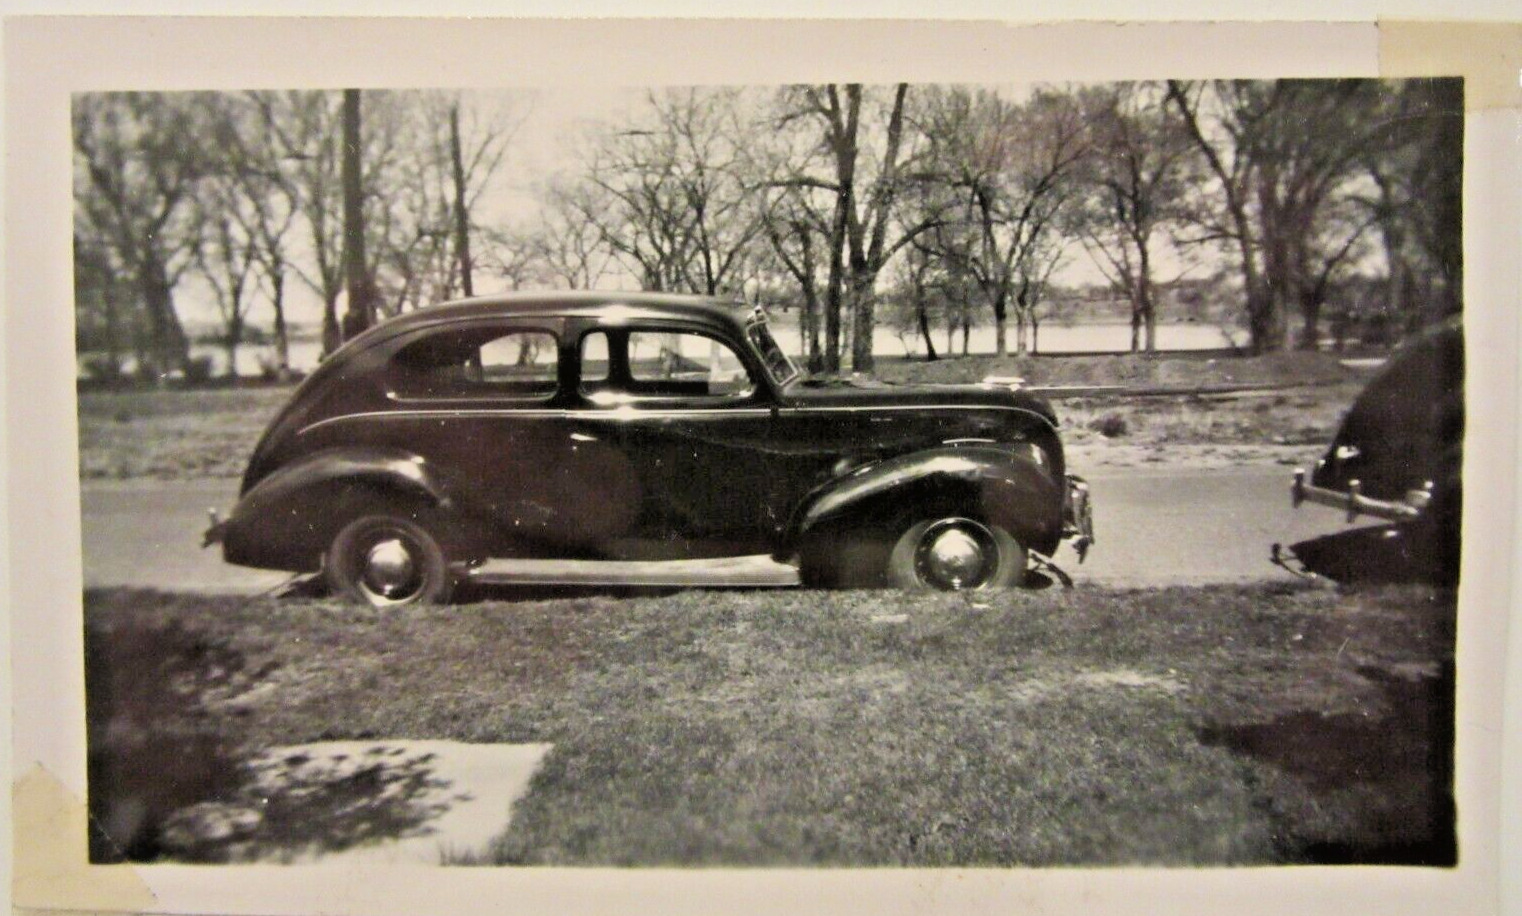 1938 FORD DeLUXE Tudor Sedan, b&w photo 4 1/2